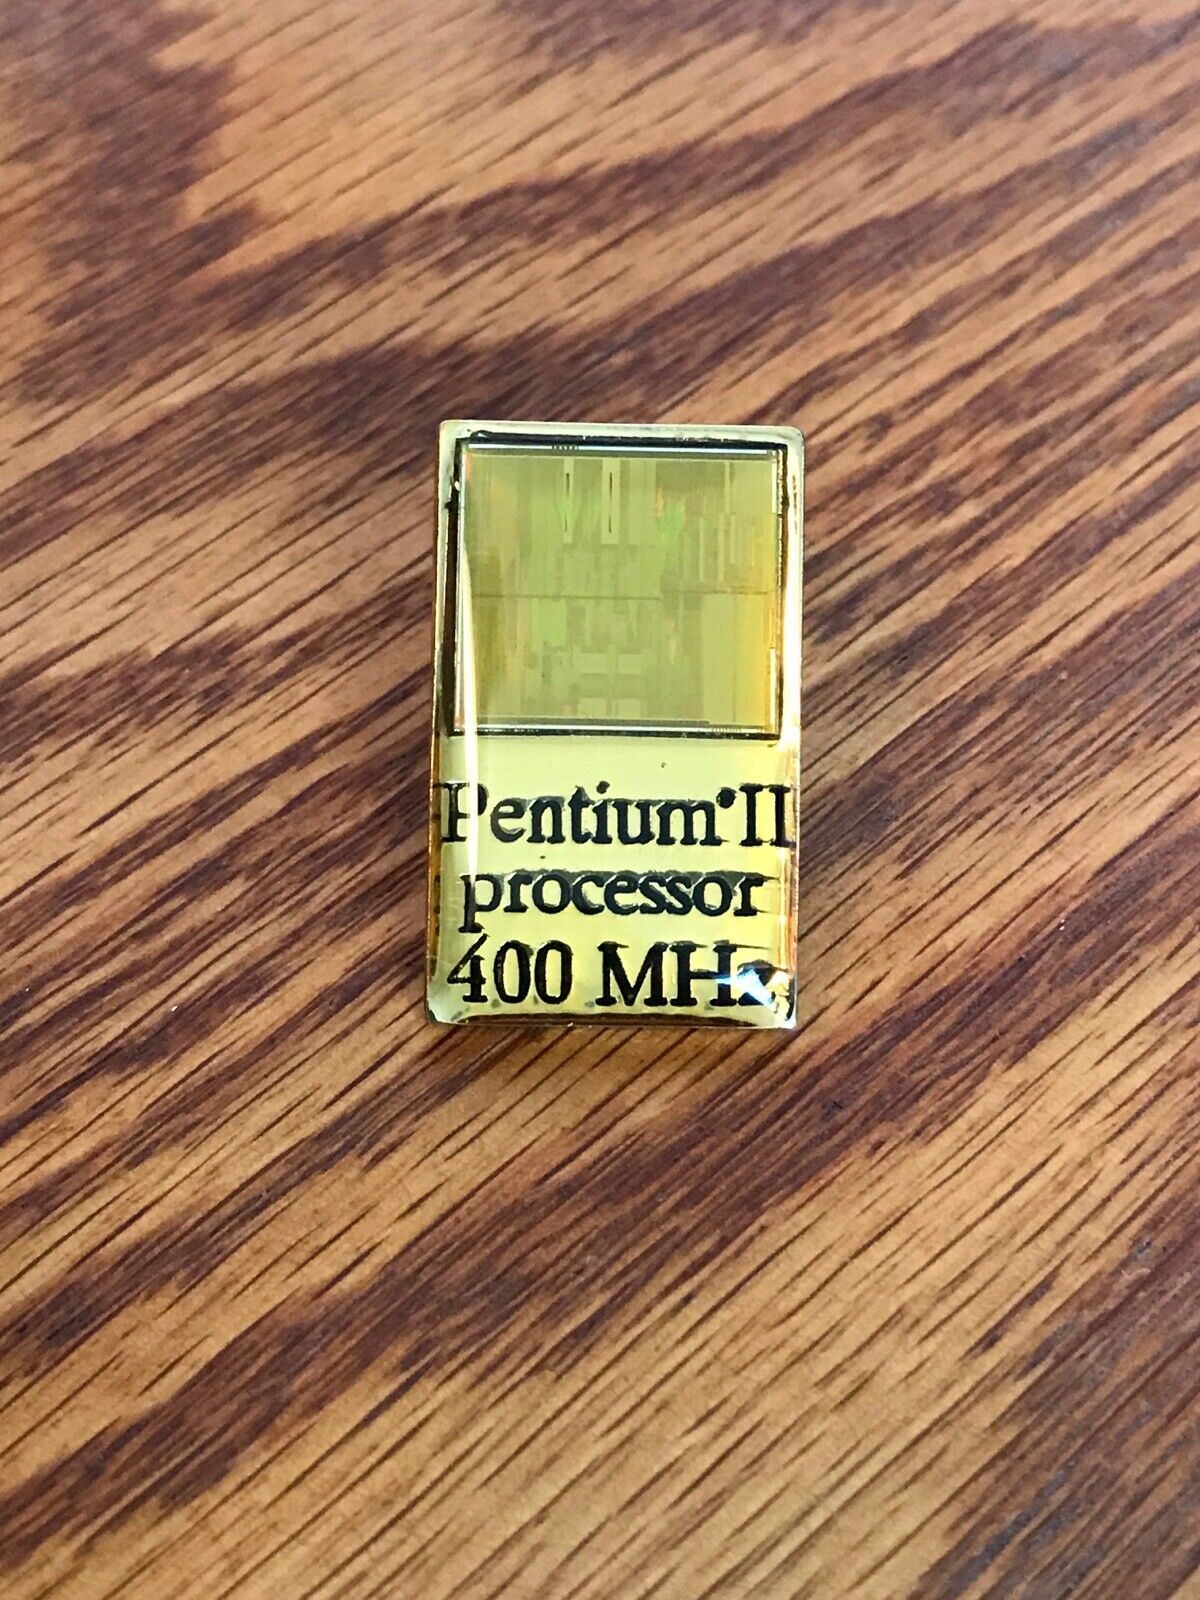 Vintage Intel Pentium II processor 400 MHz metal gold colored lapel pin with die